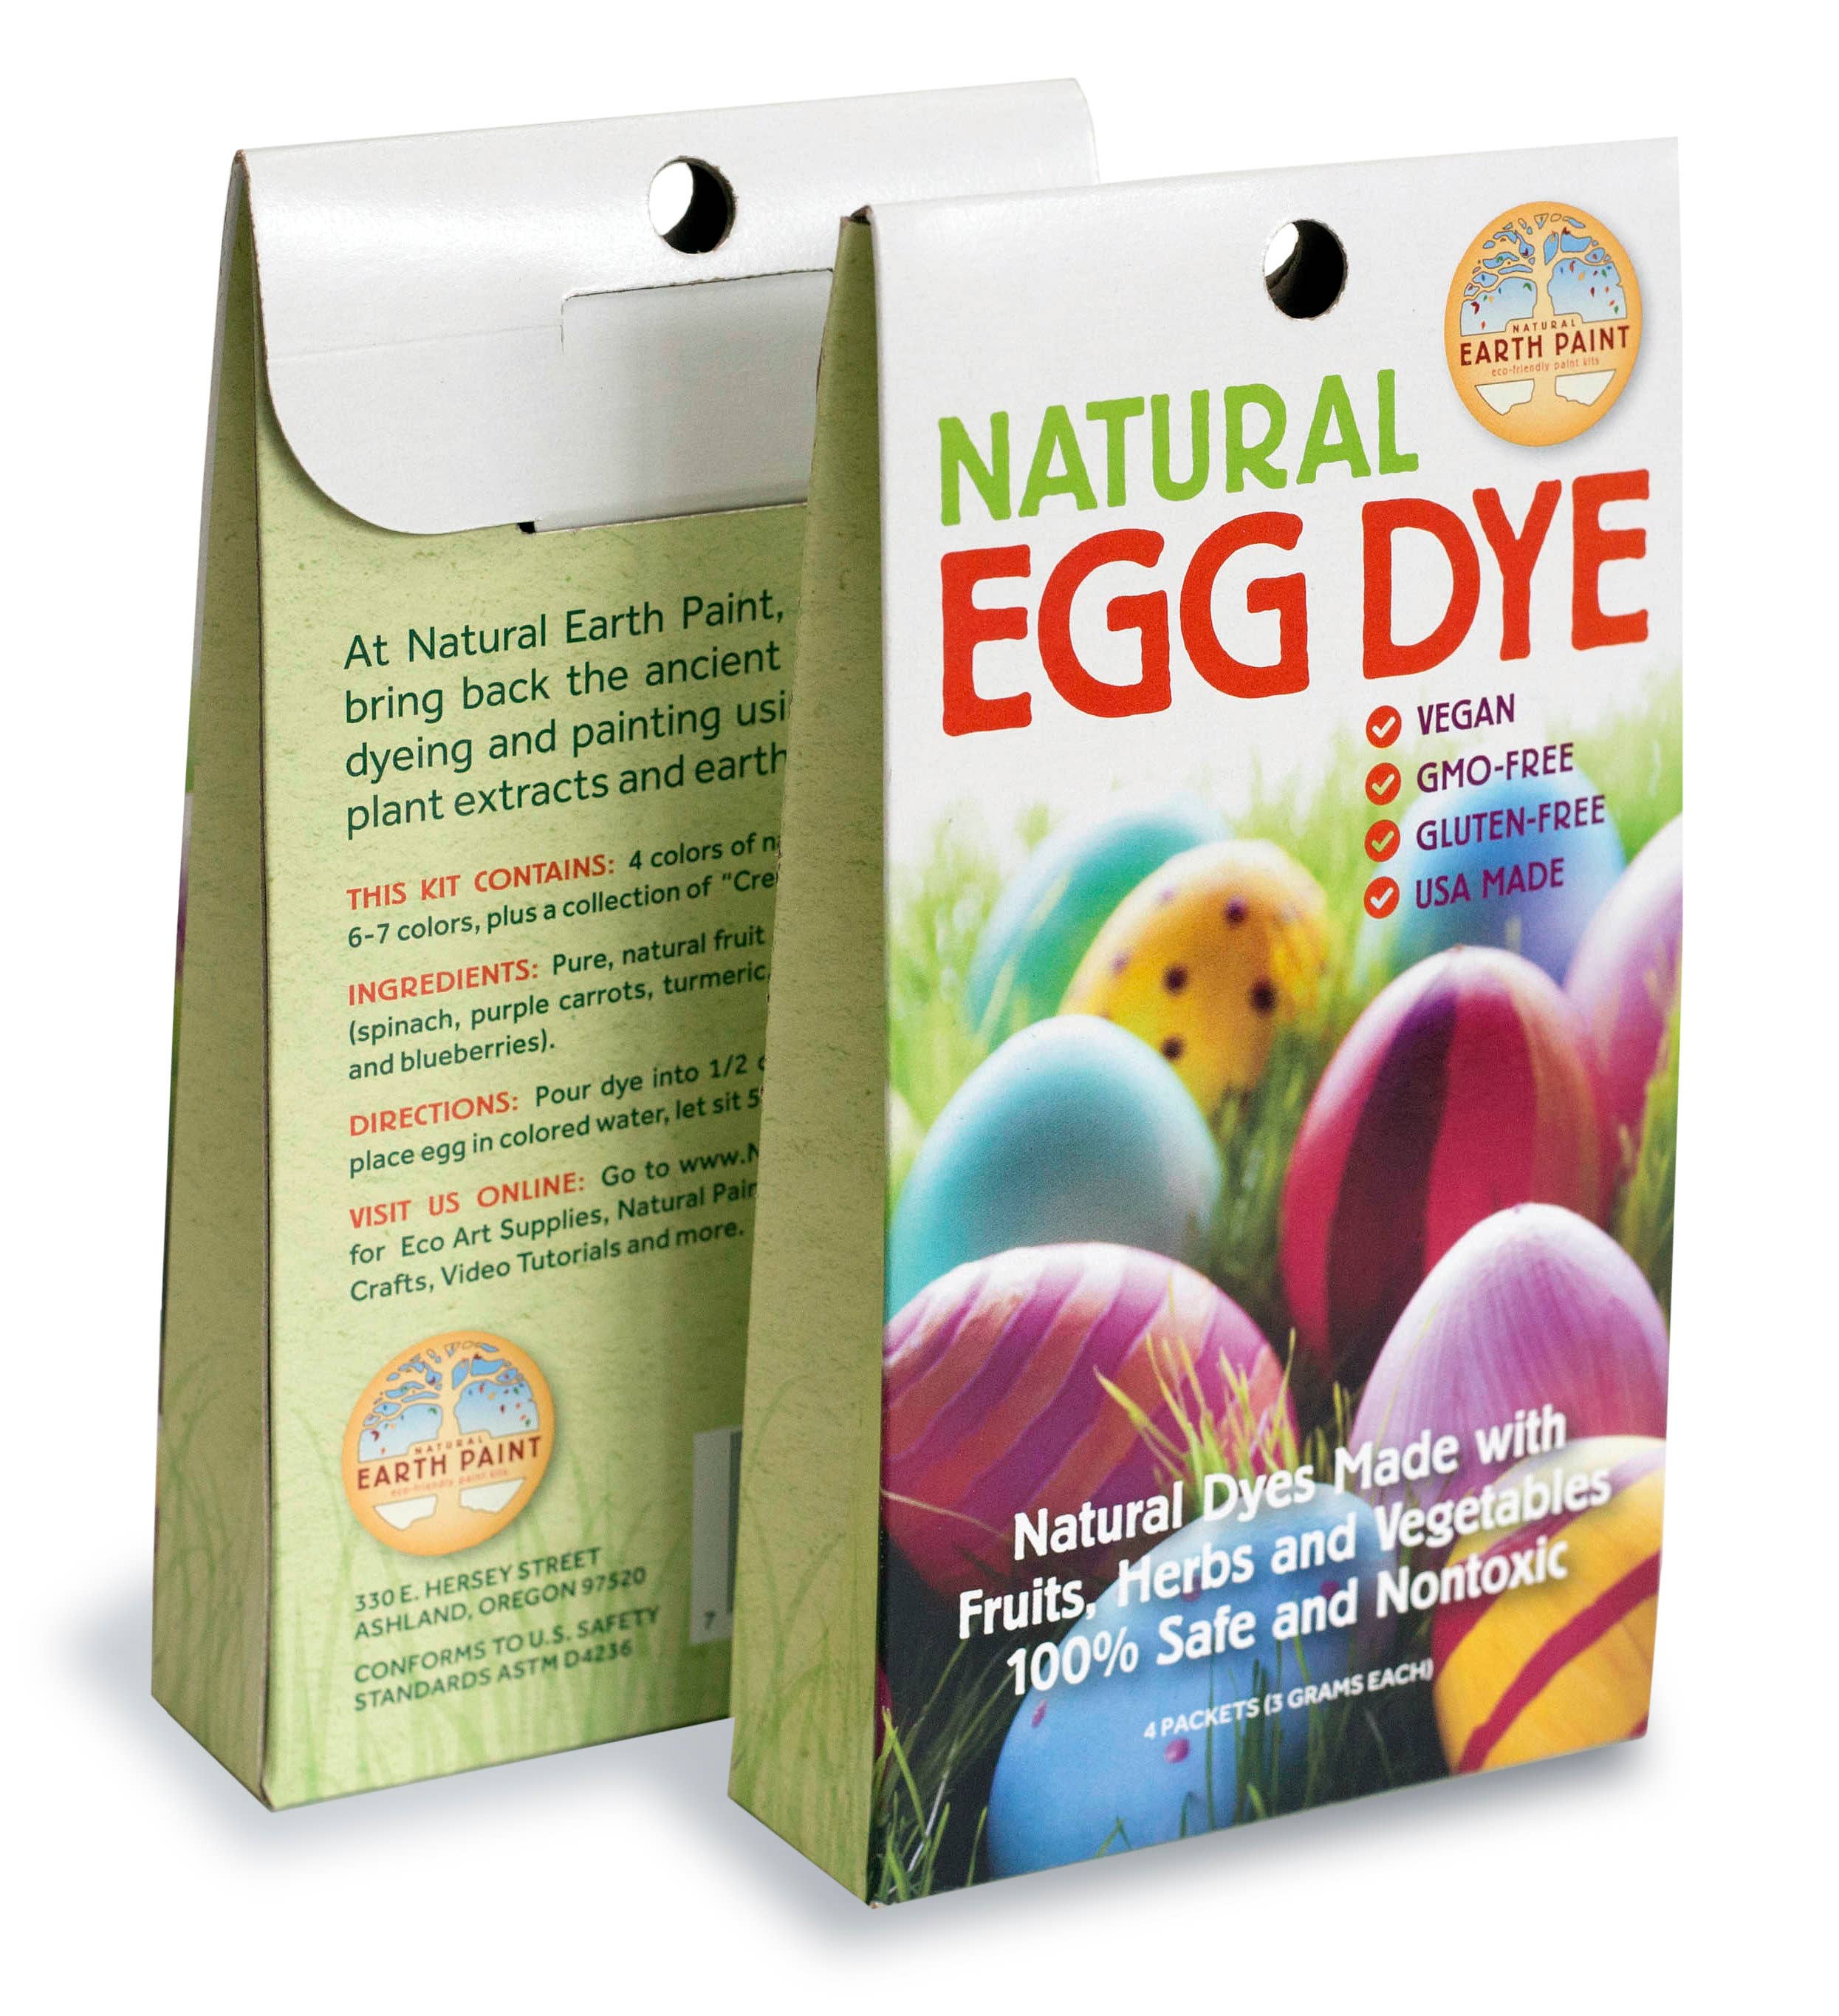 Natural Earth Paint - Natural Egg Dye Kit